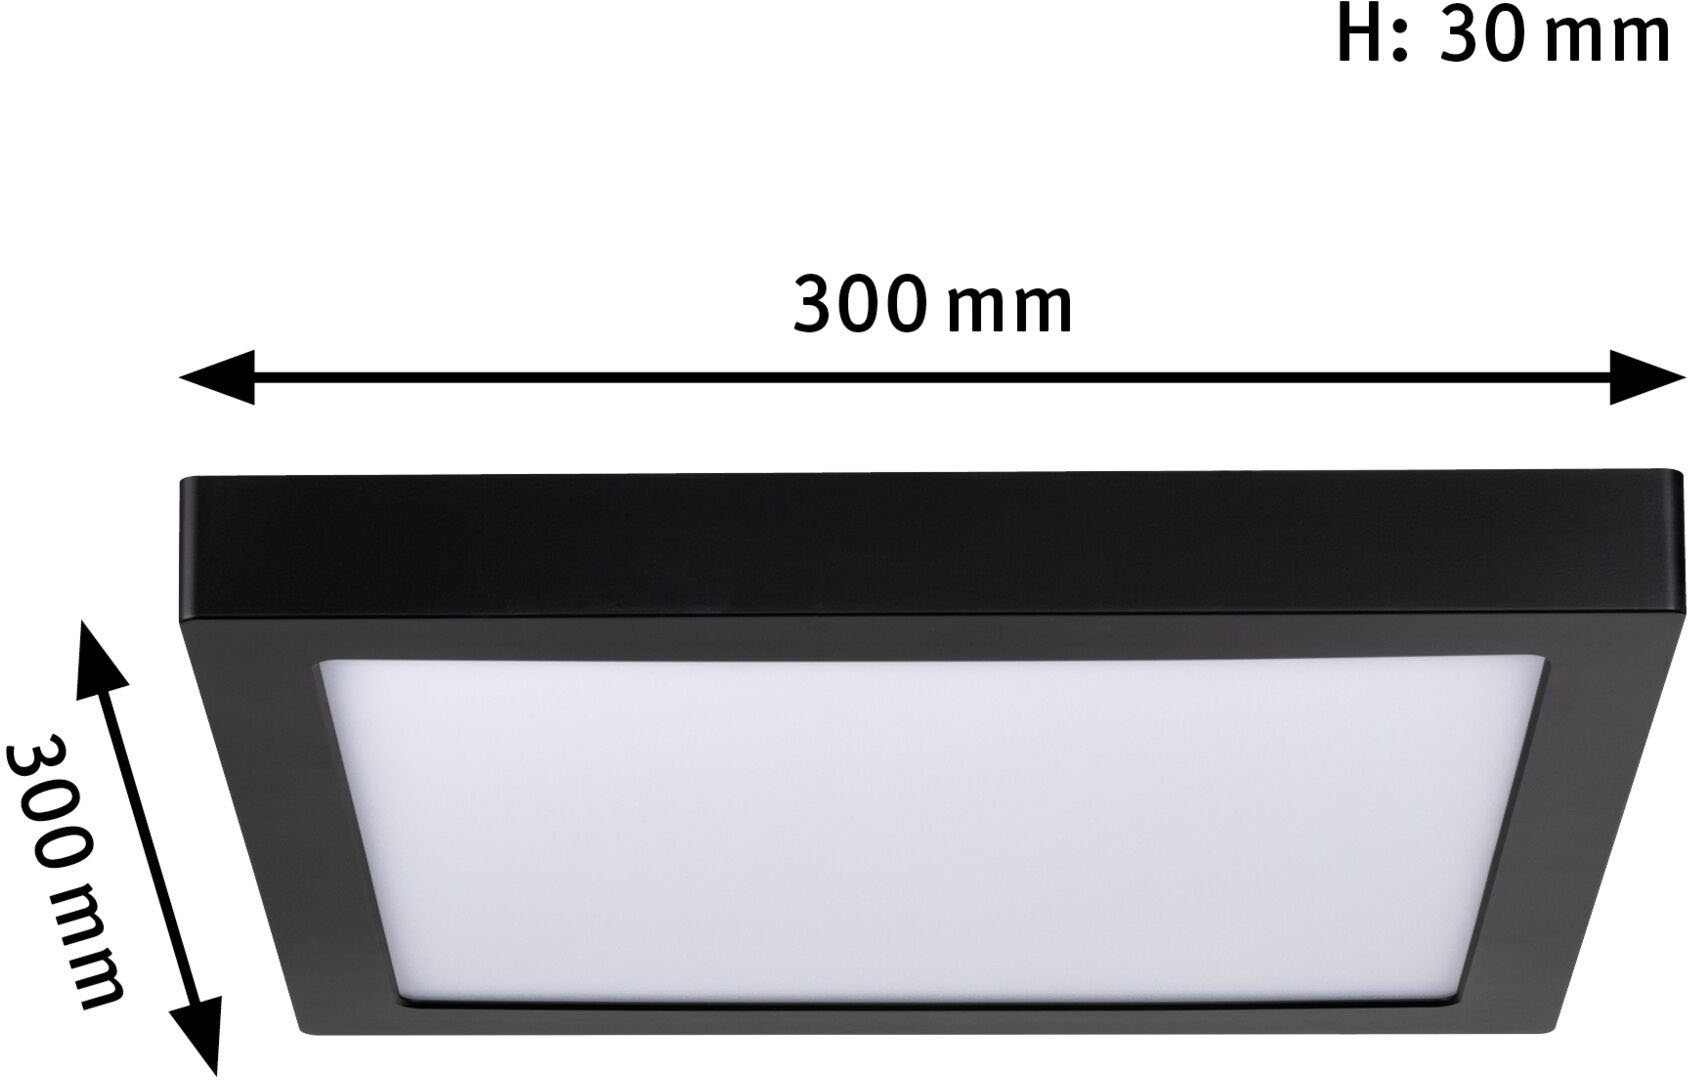 Abia Deckenleuchte 4.000K Paulmann schwarz, eckig integriert, LED Warmweiß LED 16,5W fest 300x300mm